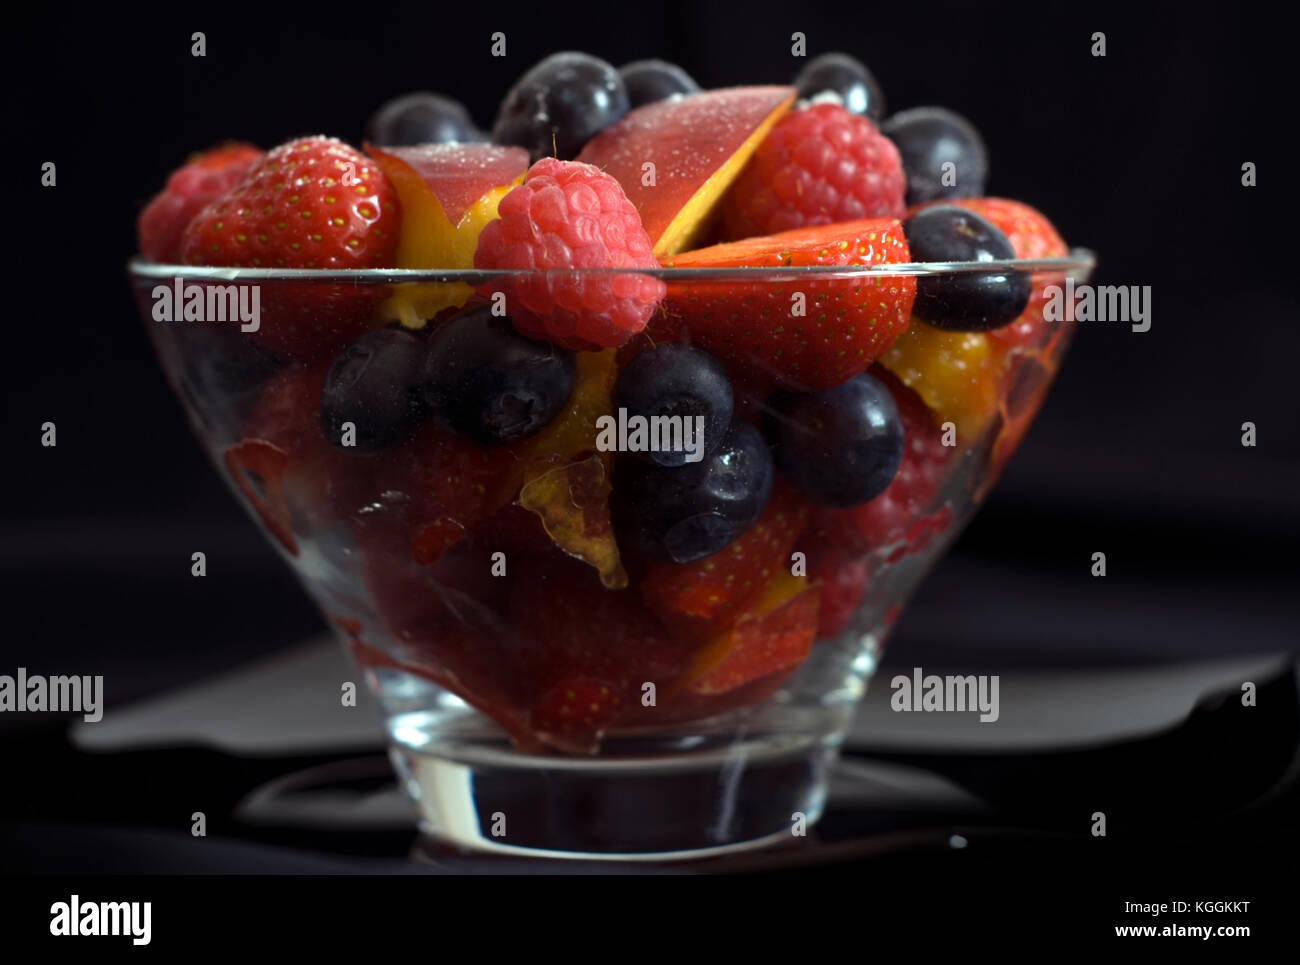 A bowl of fresh fruit. Stock Photo